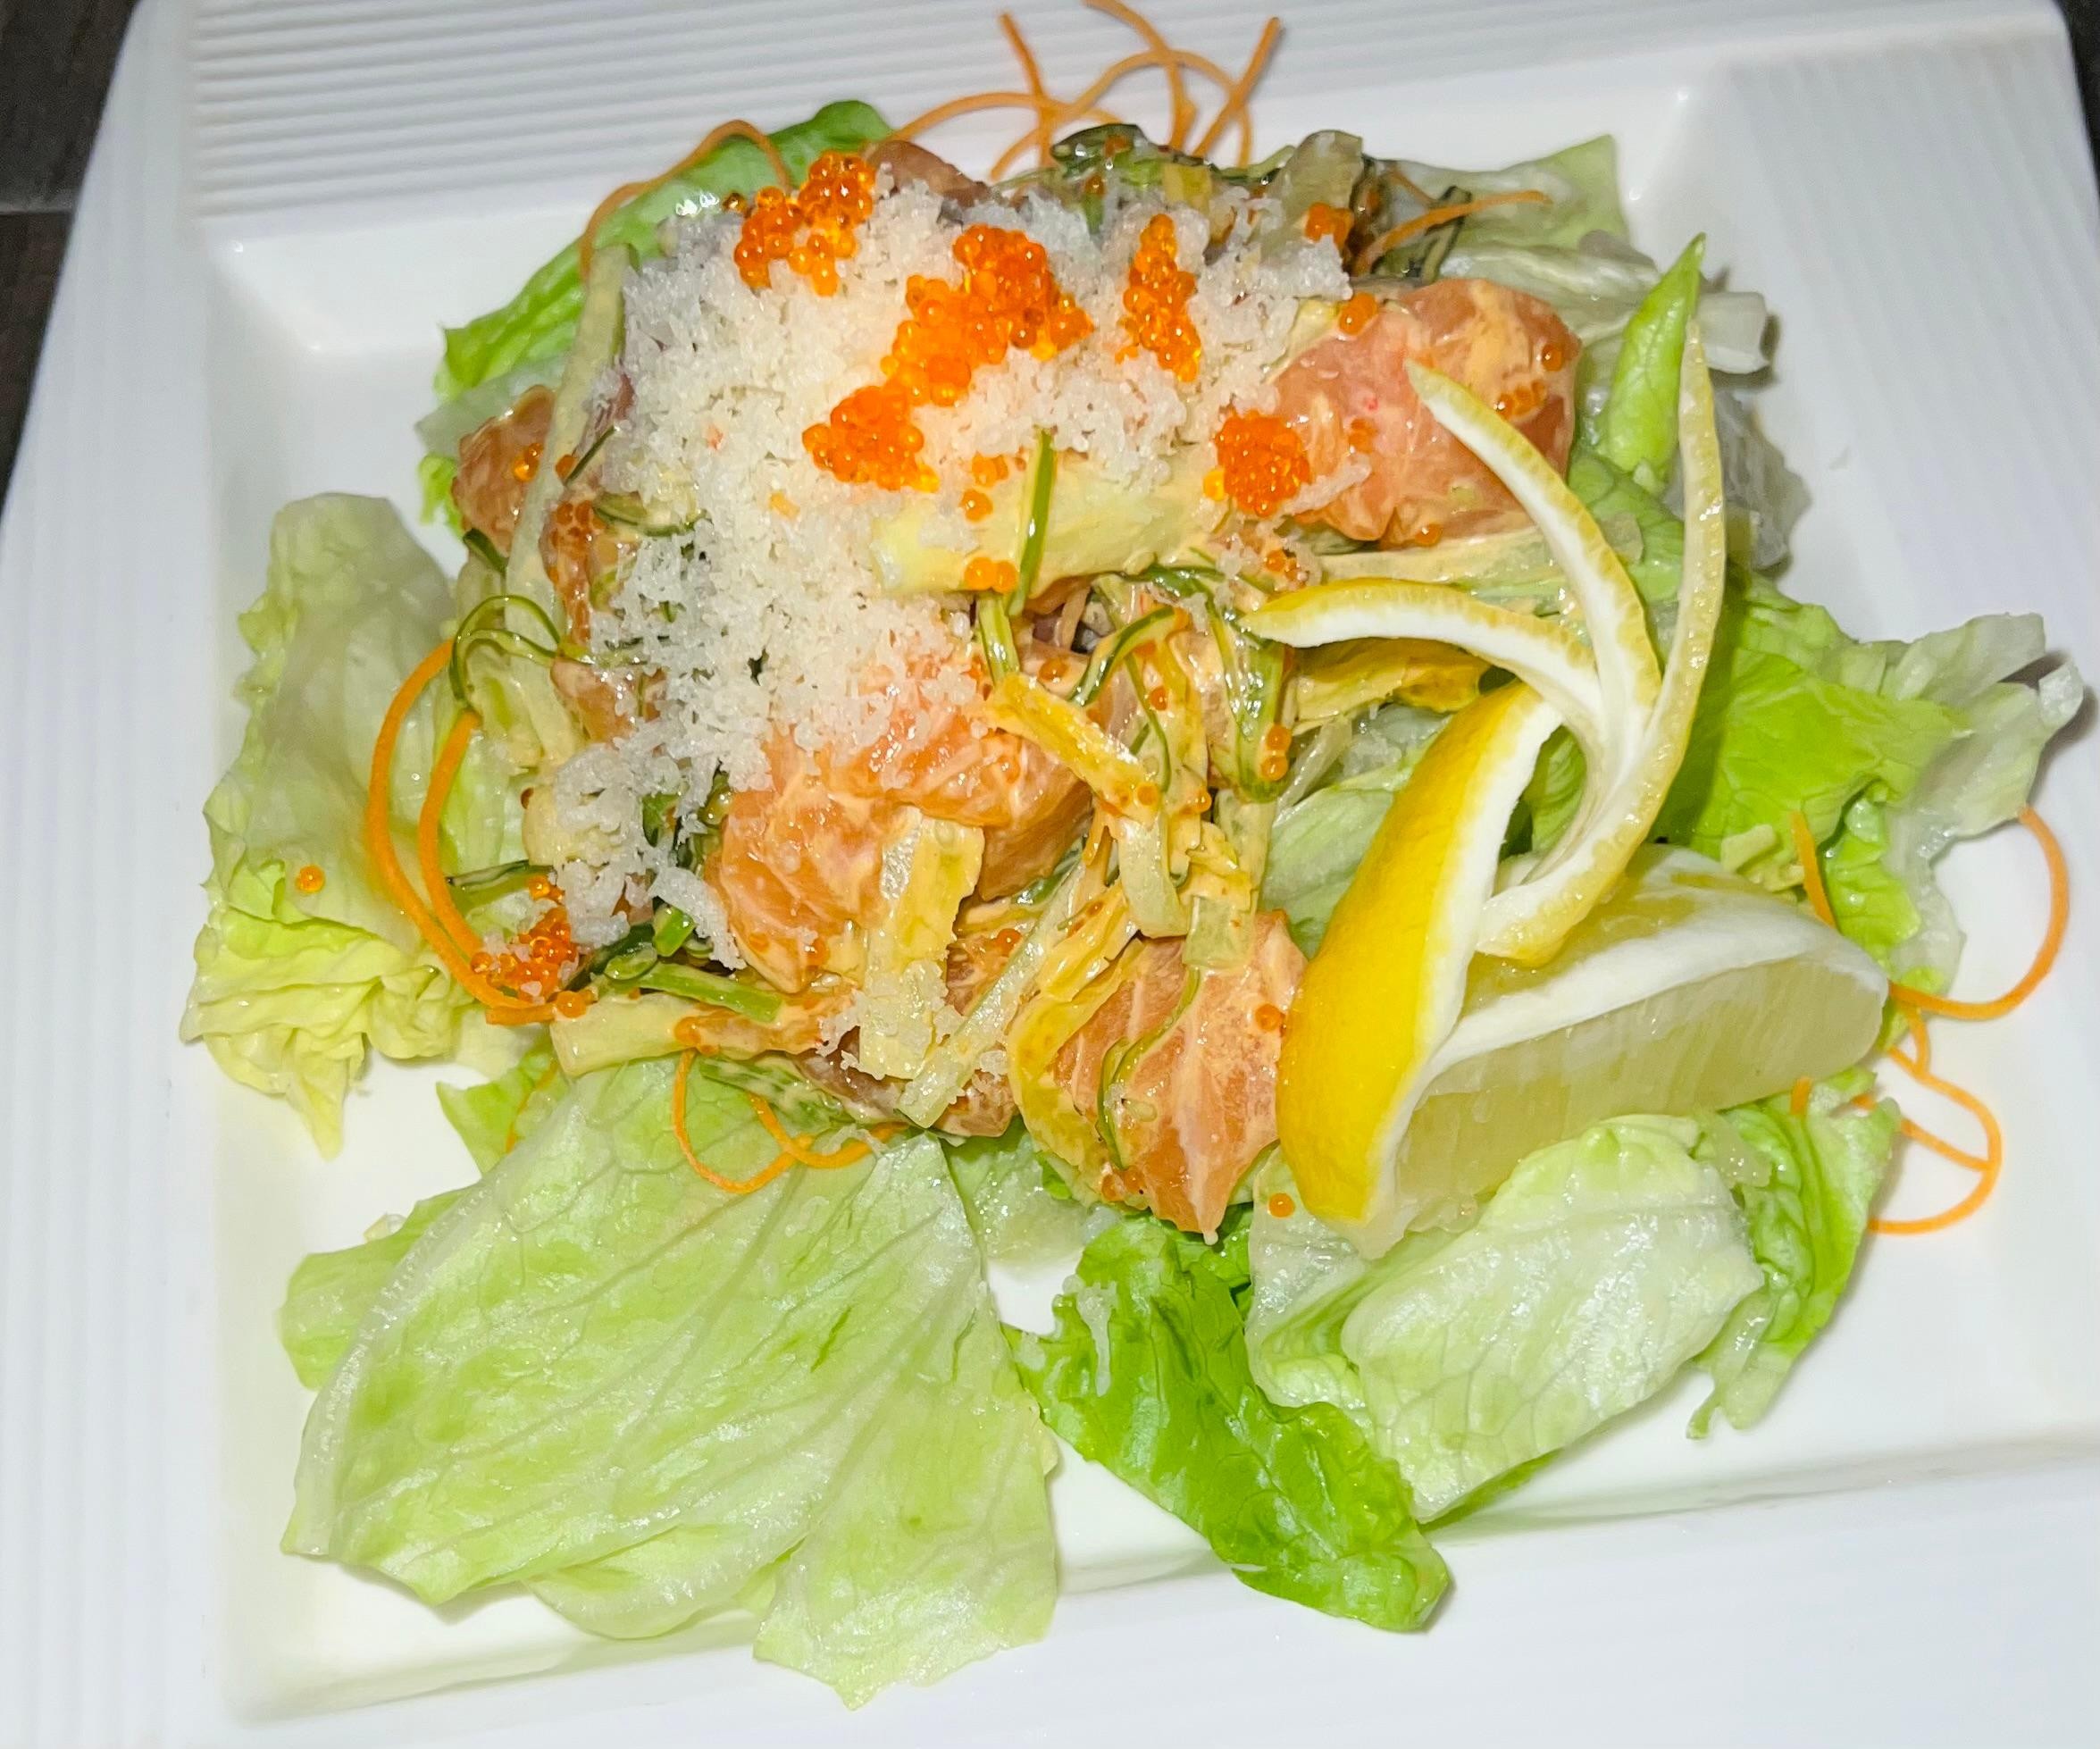 Spicy Tuna or Salmon Salad